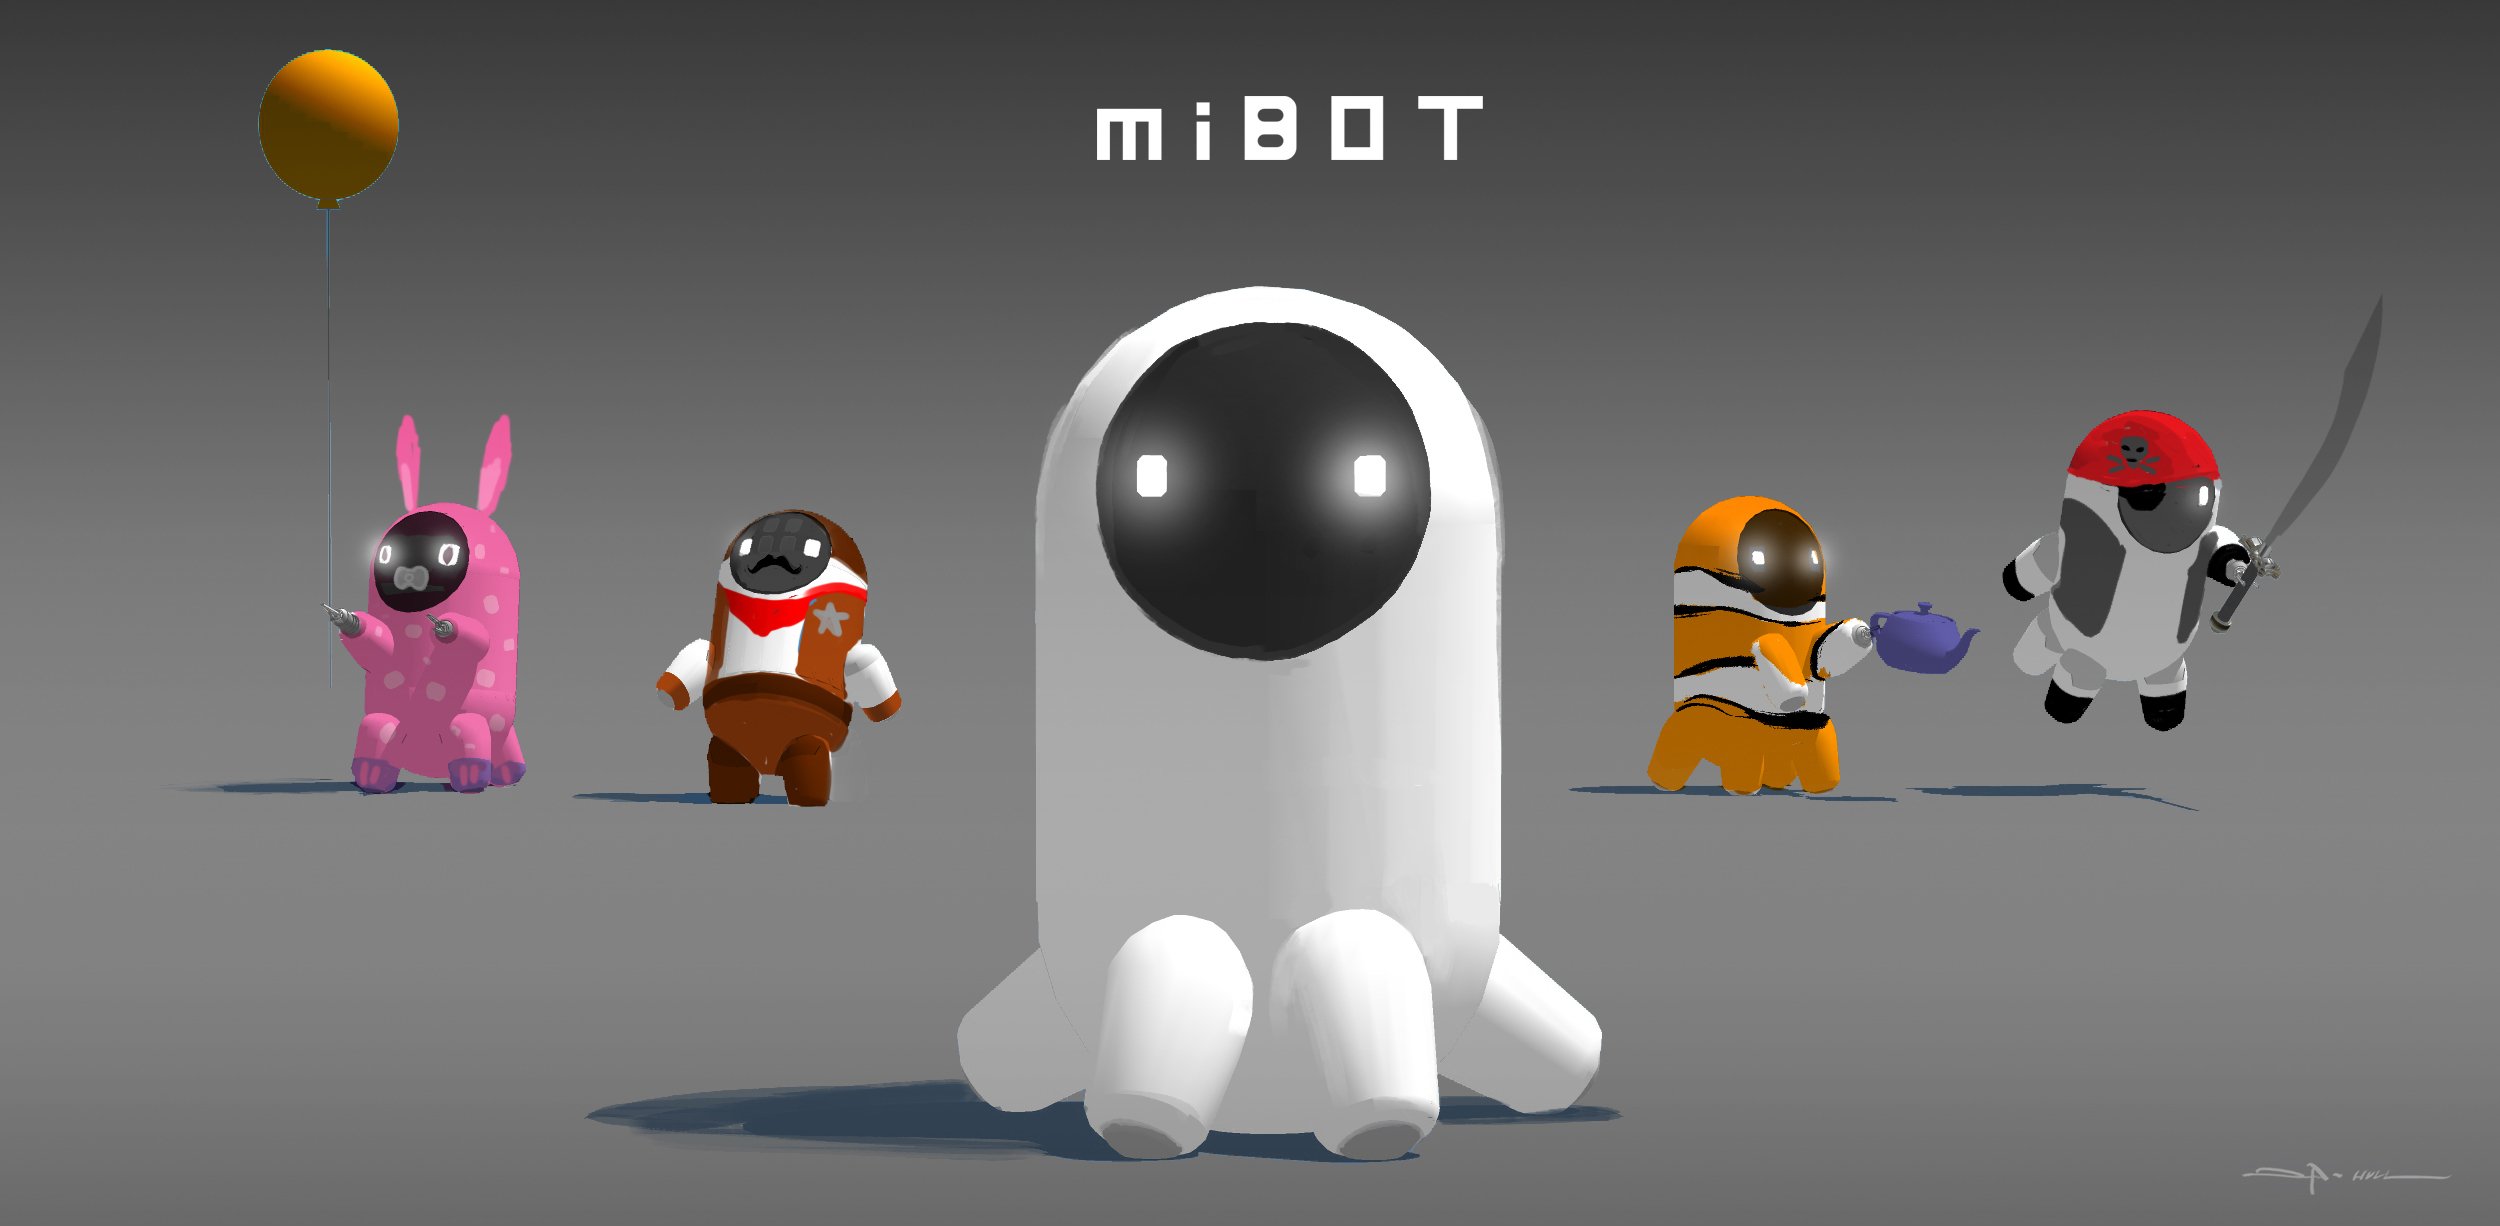 mibot1.jpg